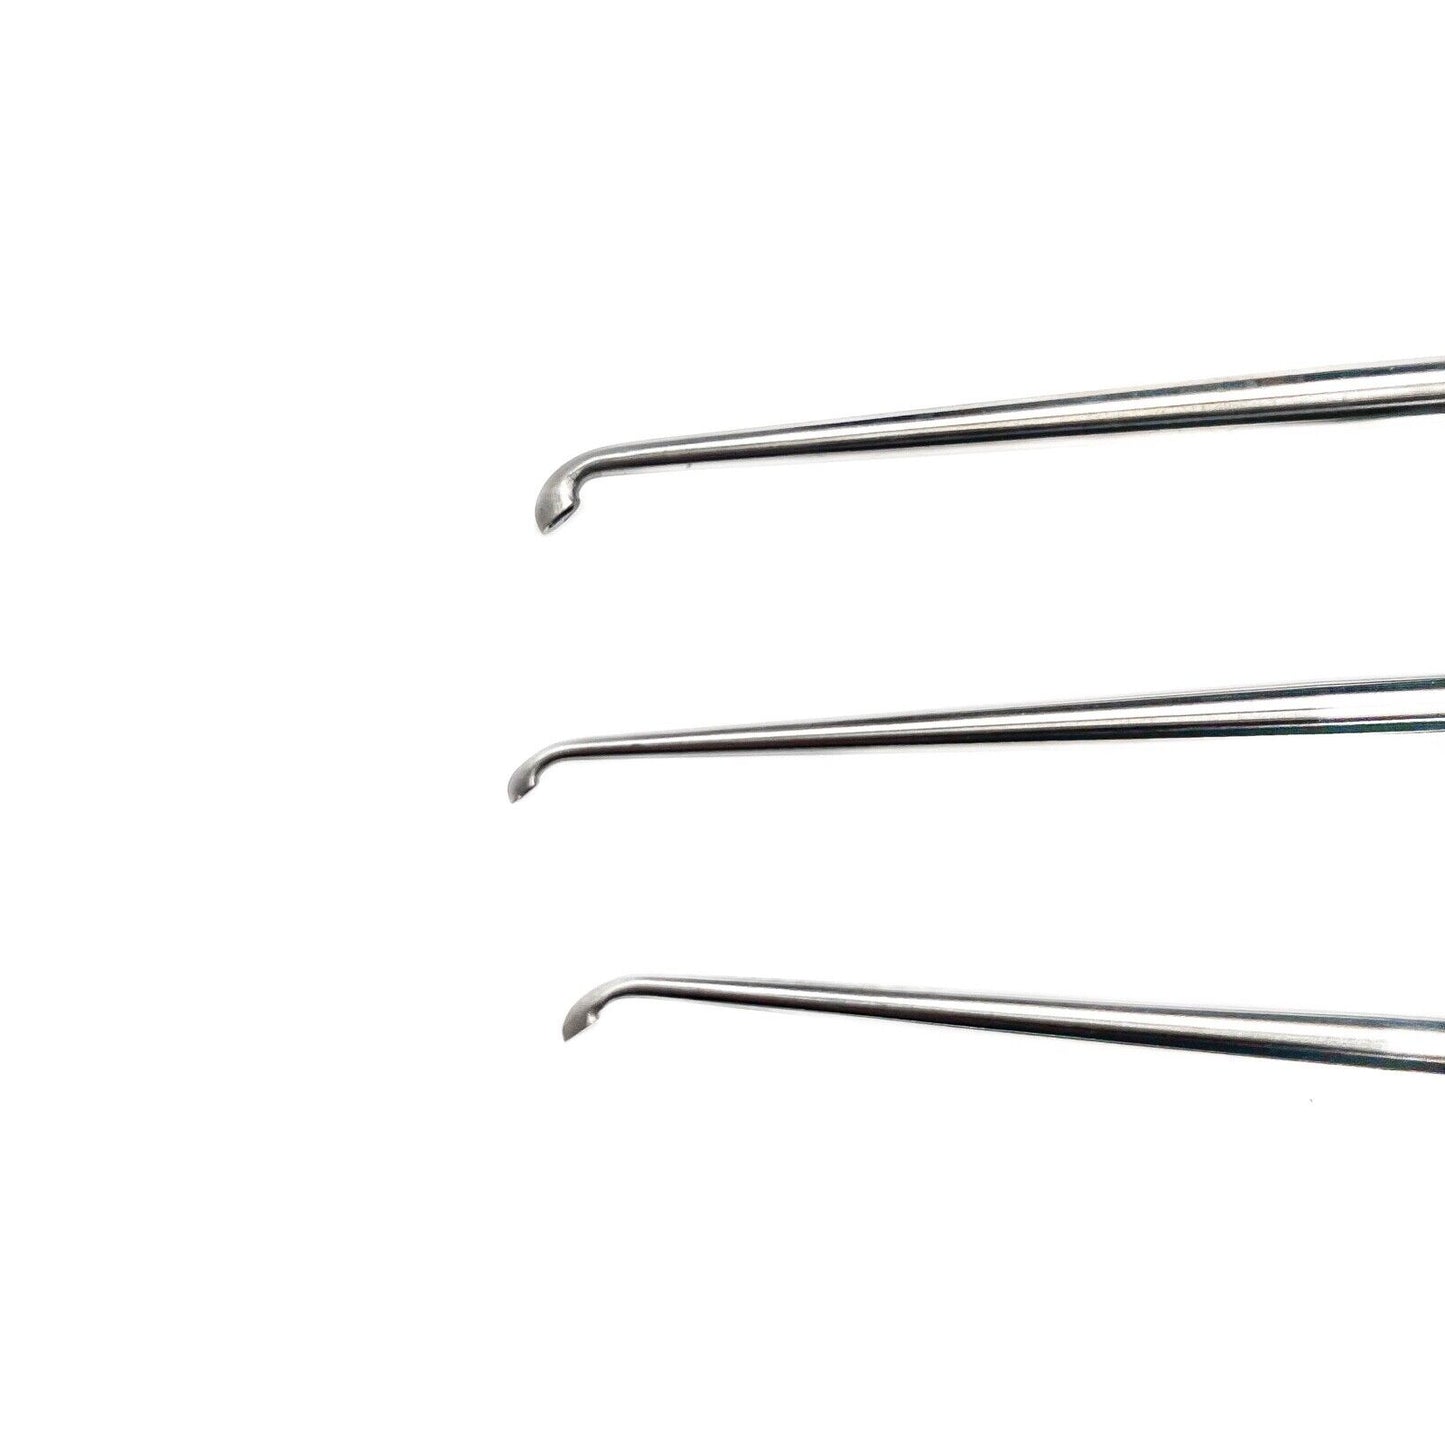 Codman, Microdiscectomy KARLIN Backward Curette Instrument Set with Case